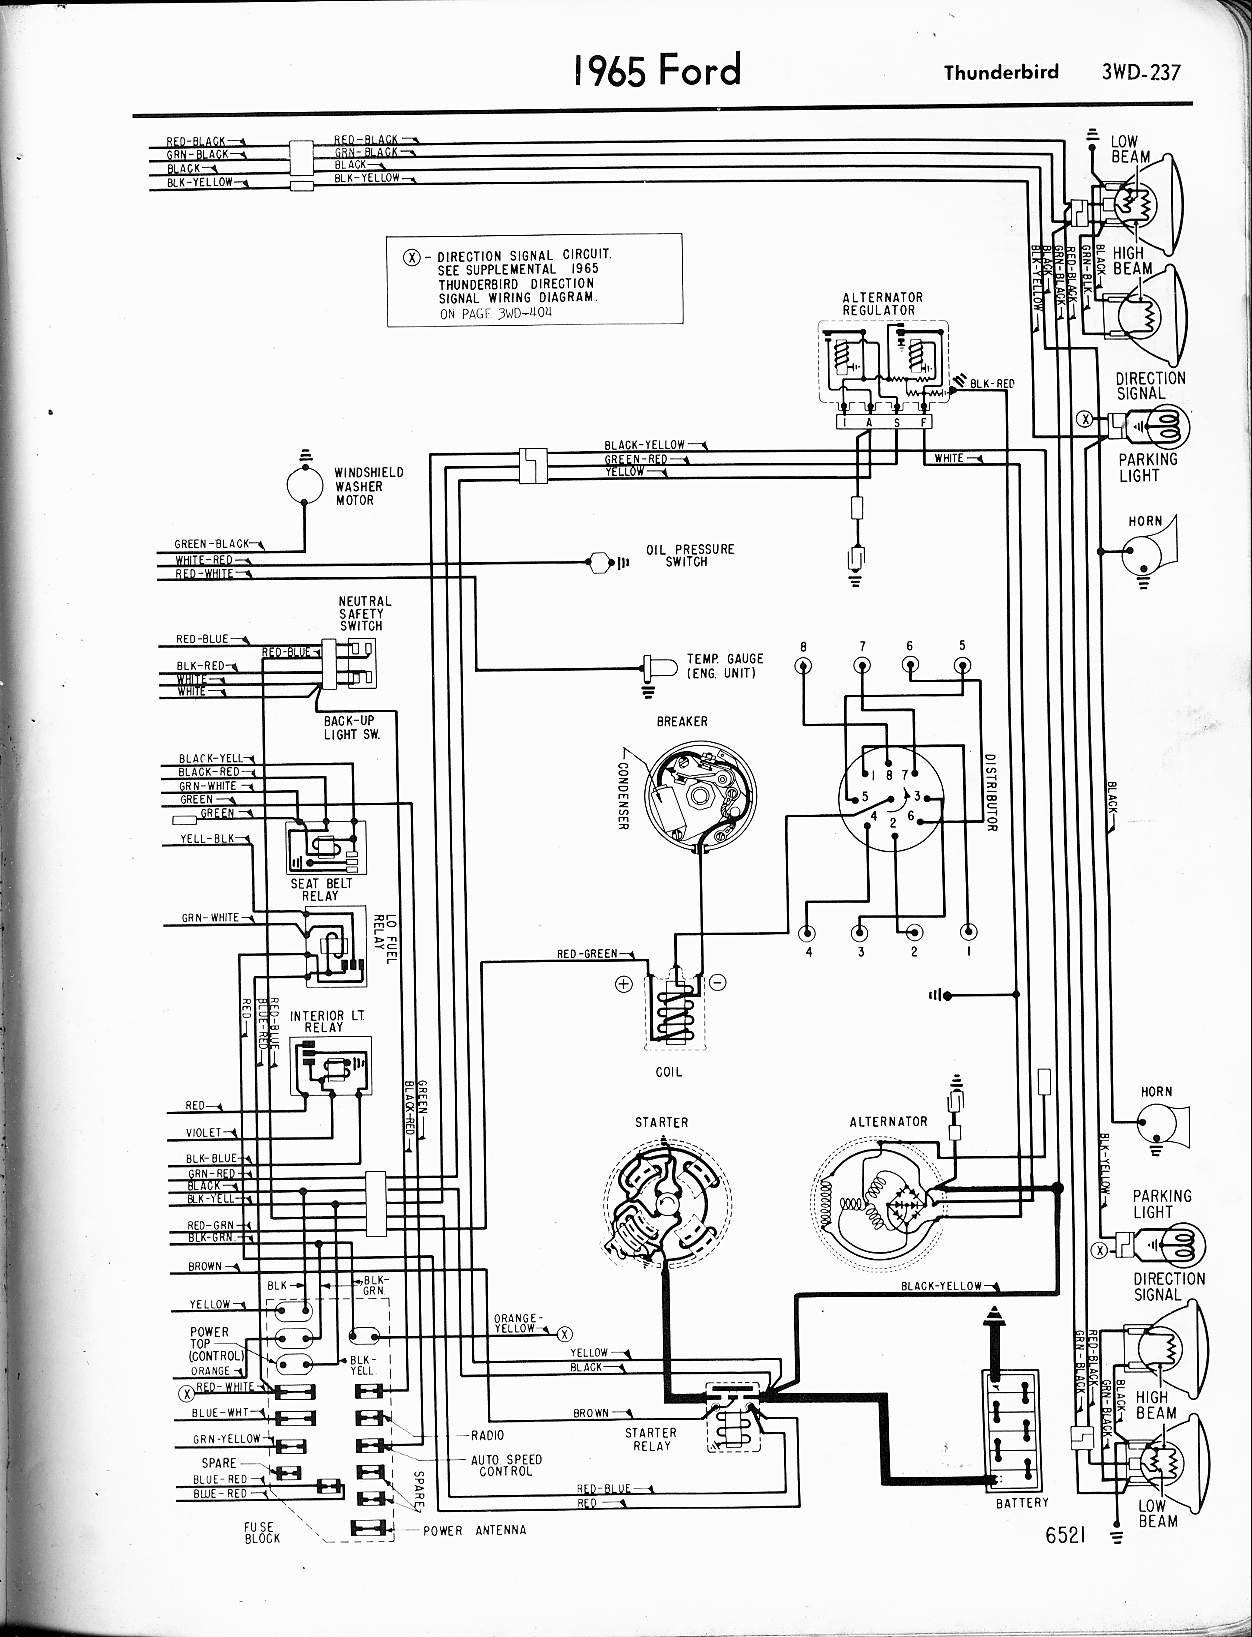 Mustang Starter solenoid Wiring Diagram Best 1965 Thunderbird Wiring Diagram Wiring Diagrams Schematics Inspirational